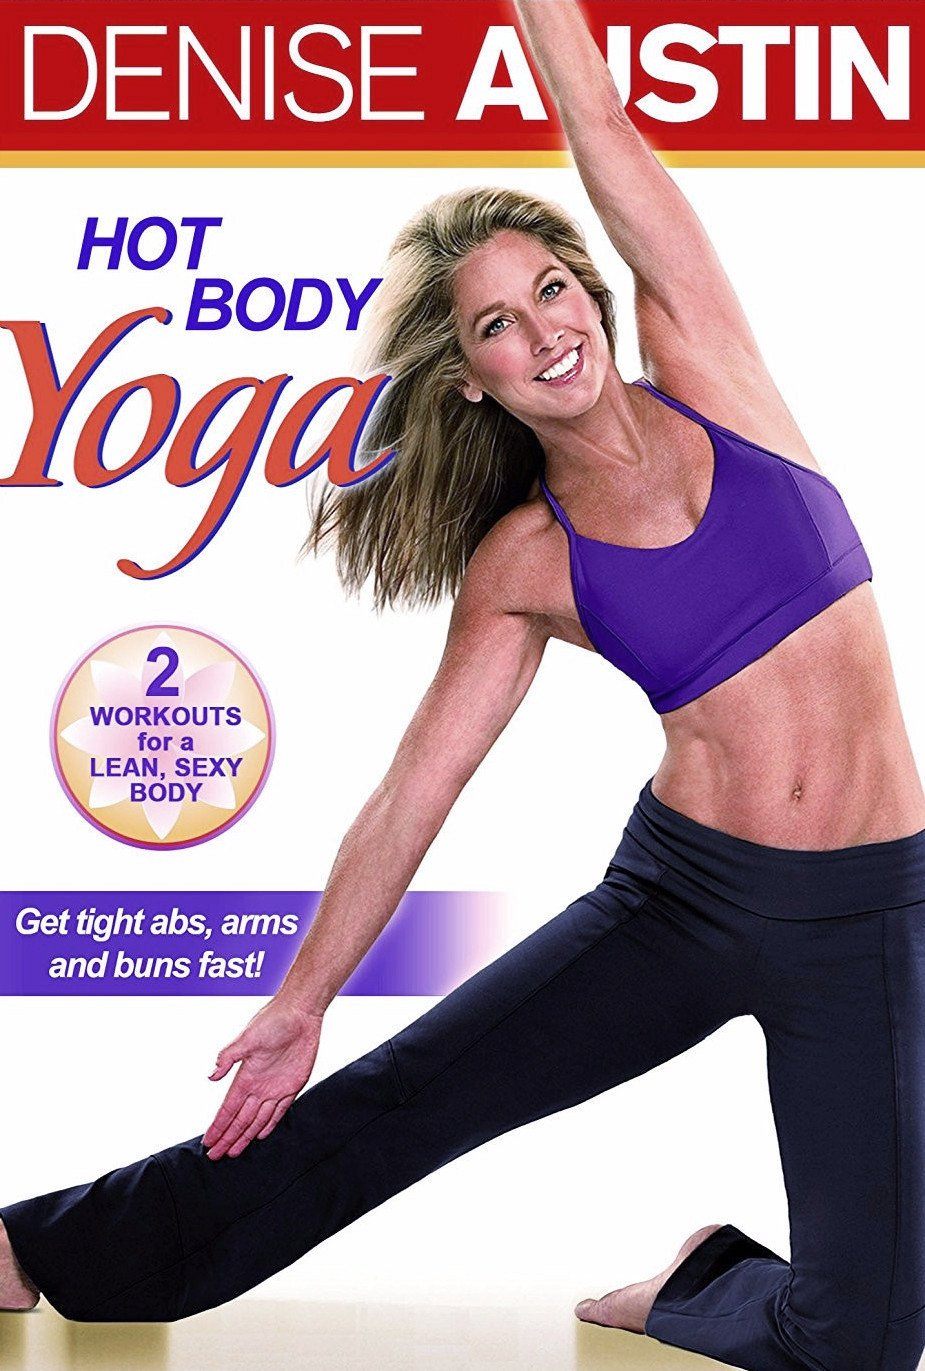 Denise Austin S Hot Body Yoga